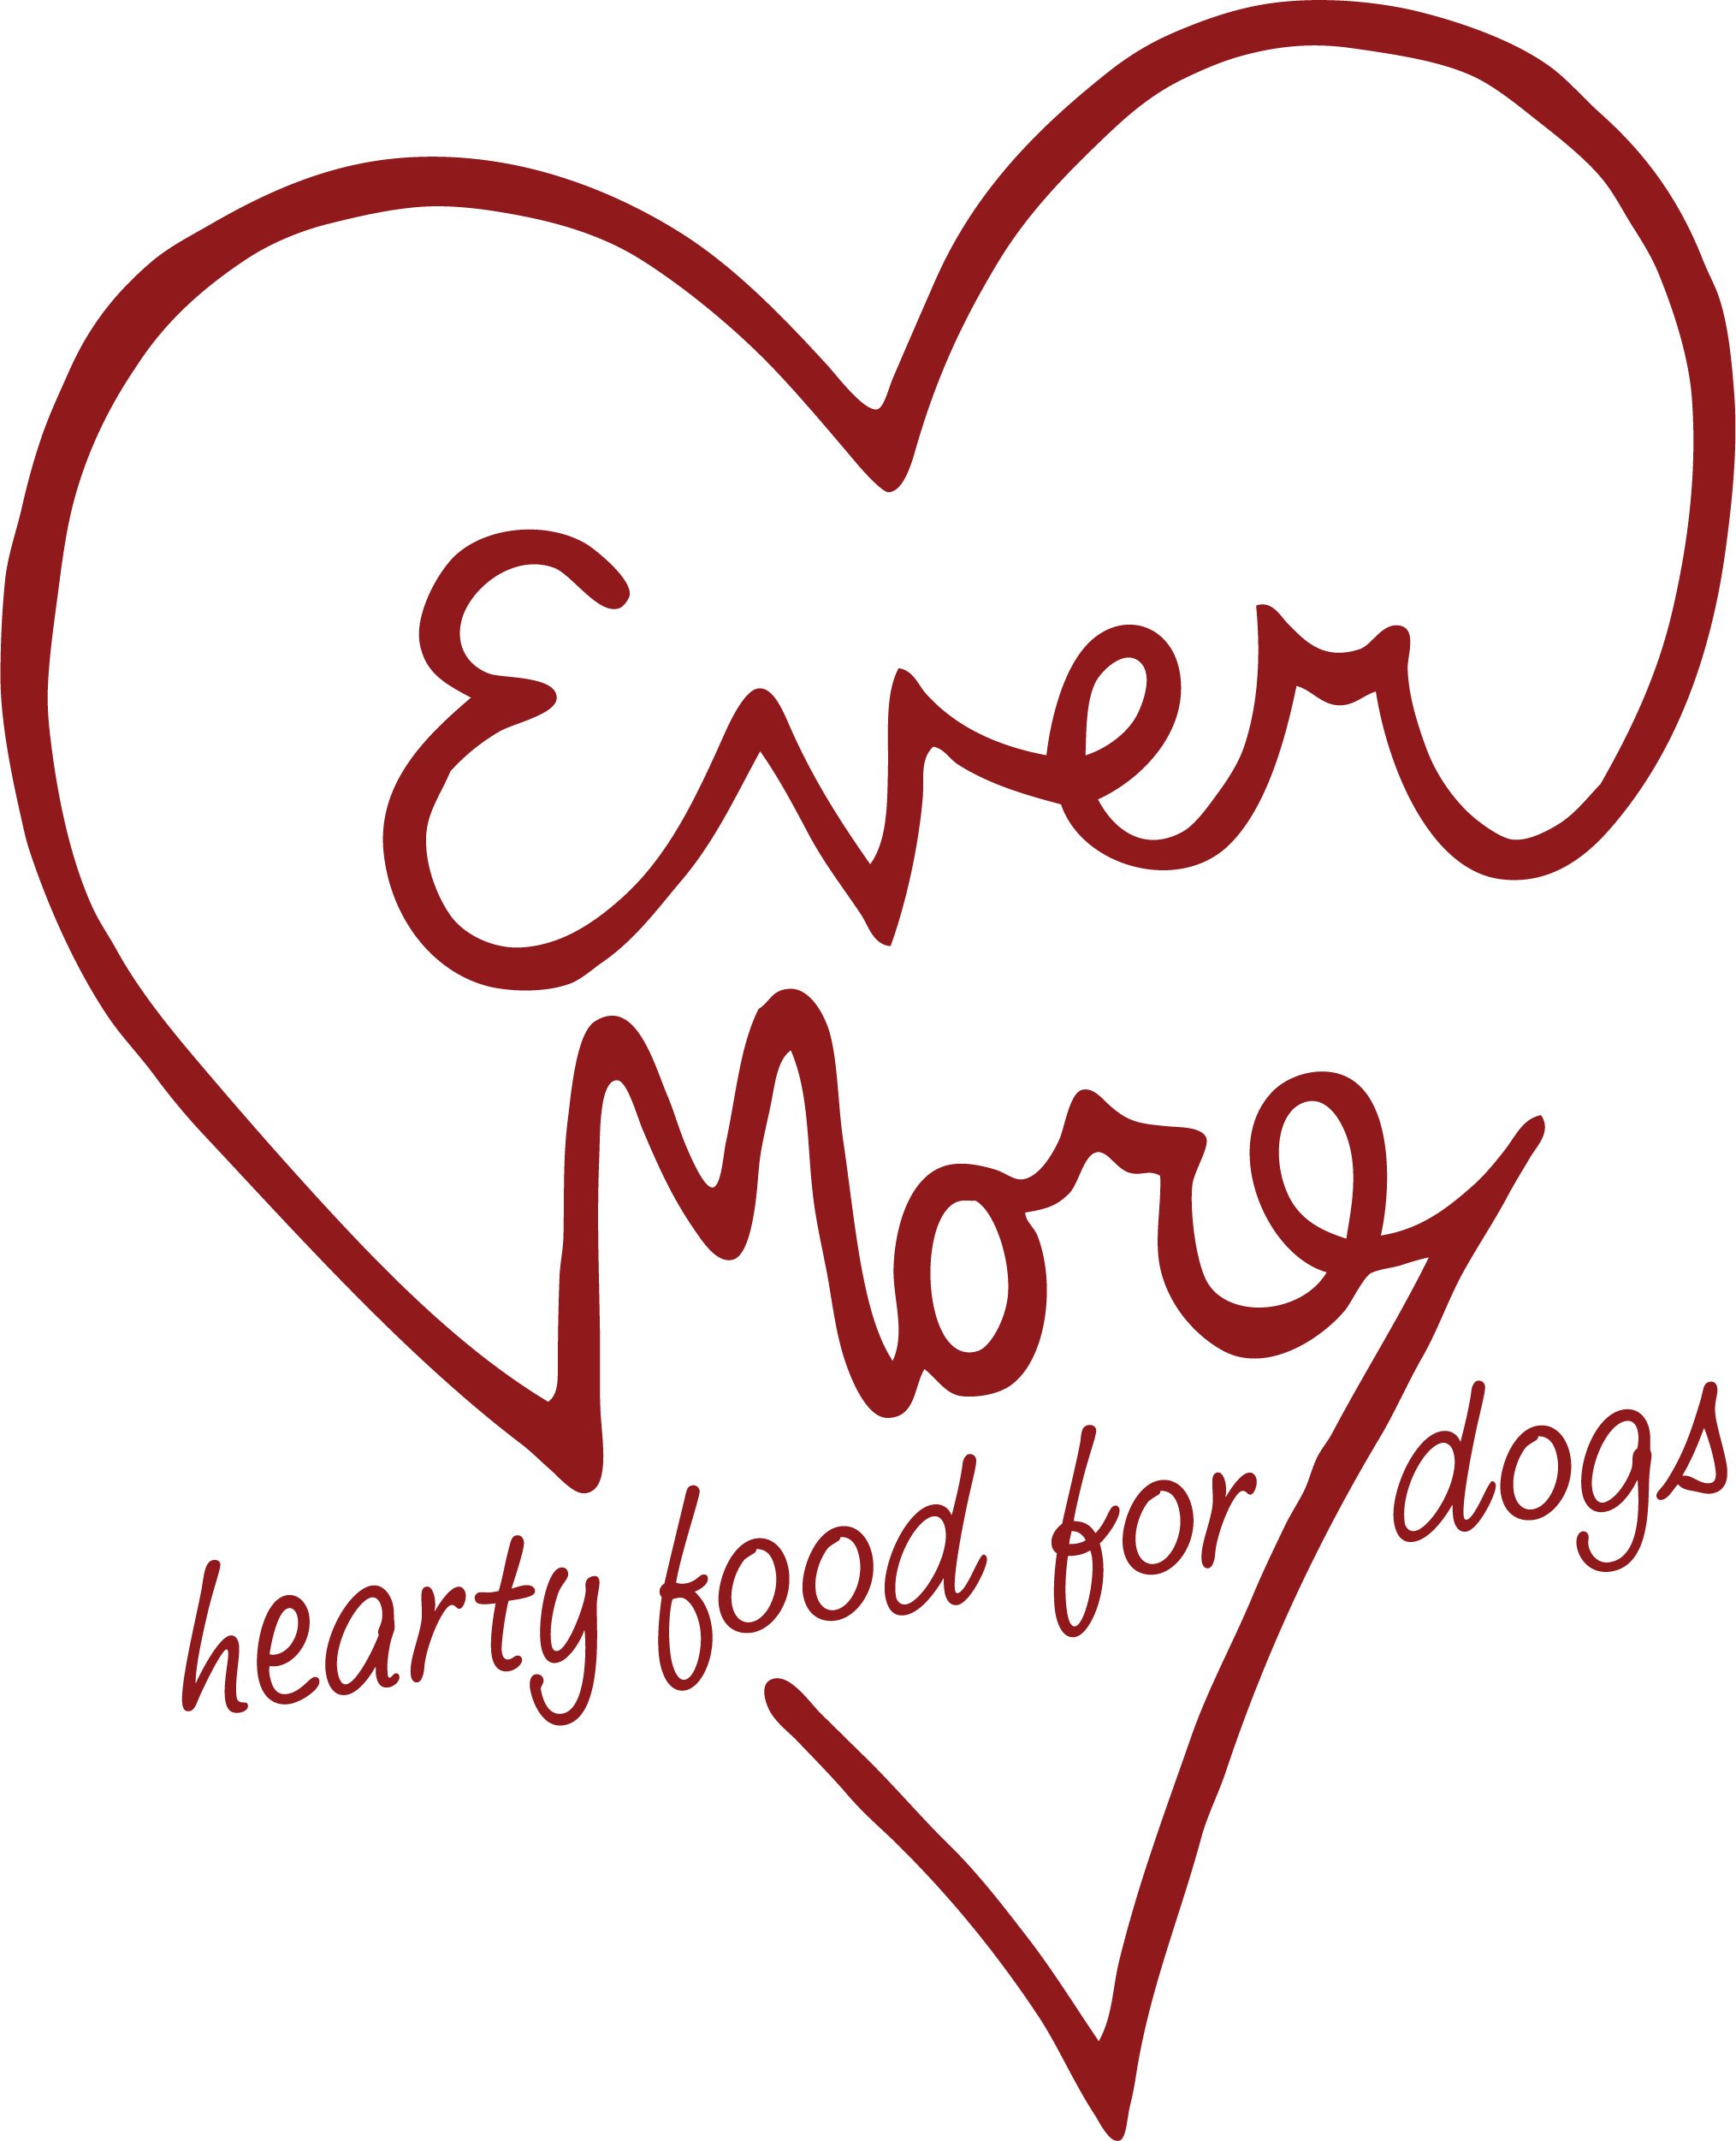 Evermore Pet Food Earns Farm Animal Welfare Certification from Global Animal Partnership